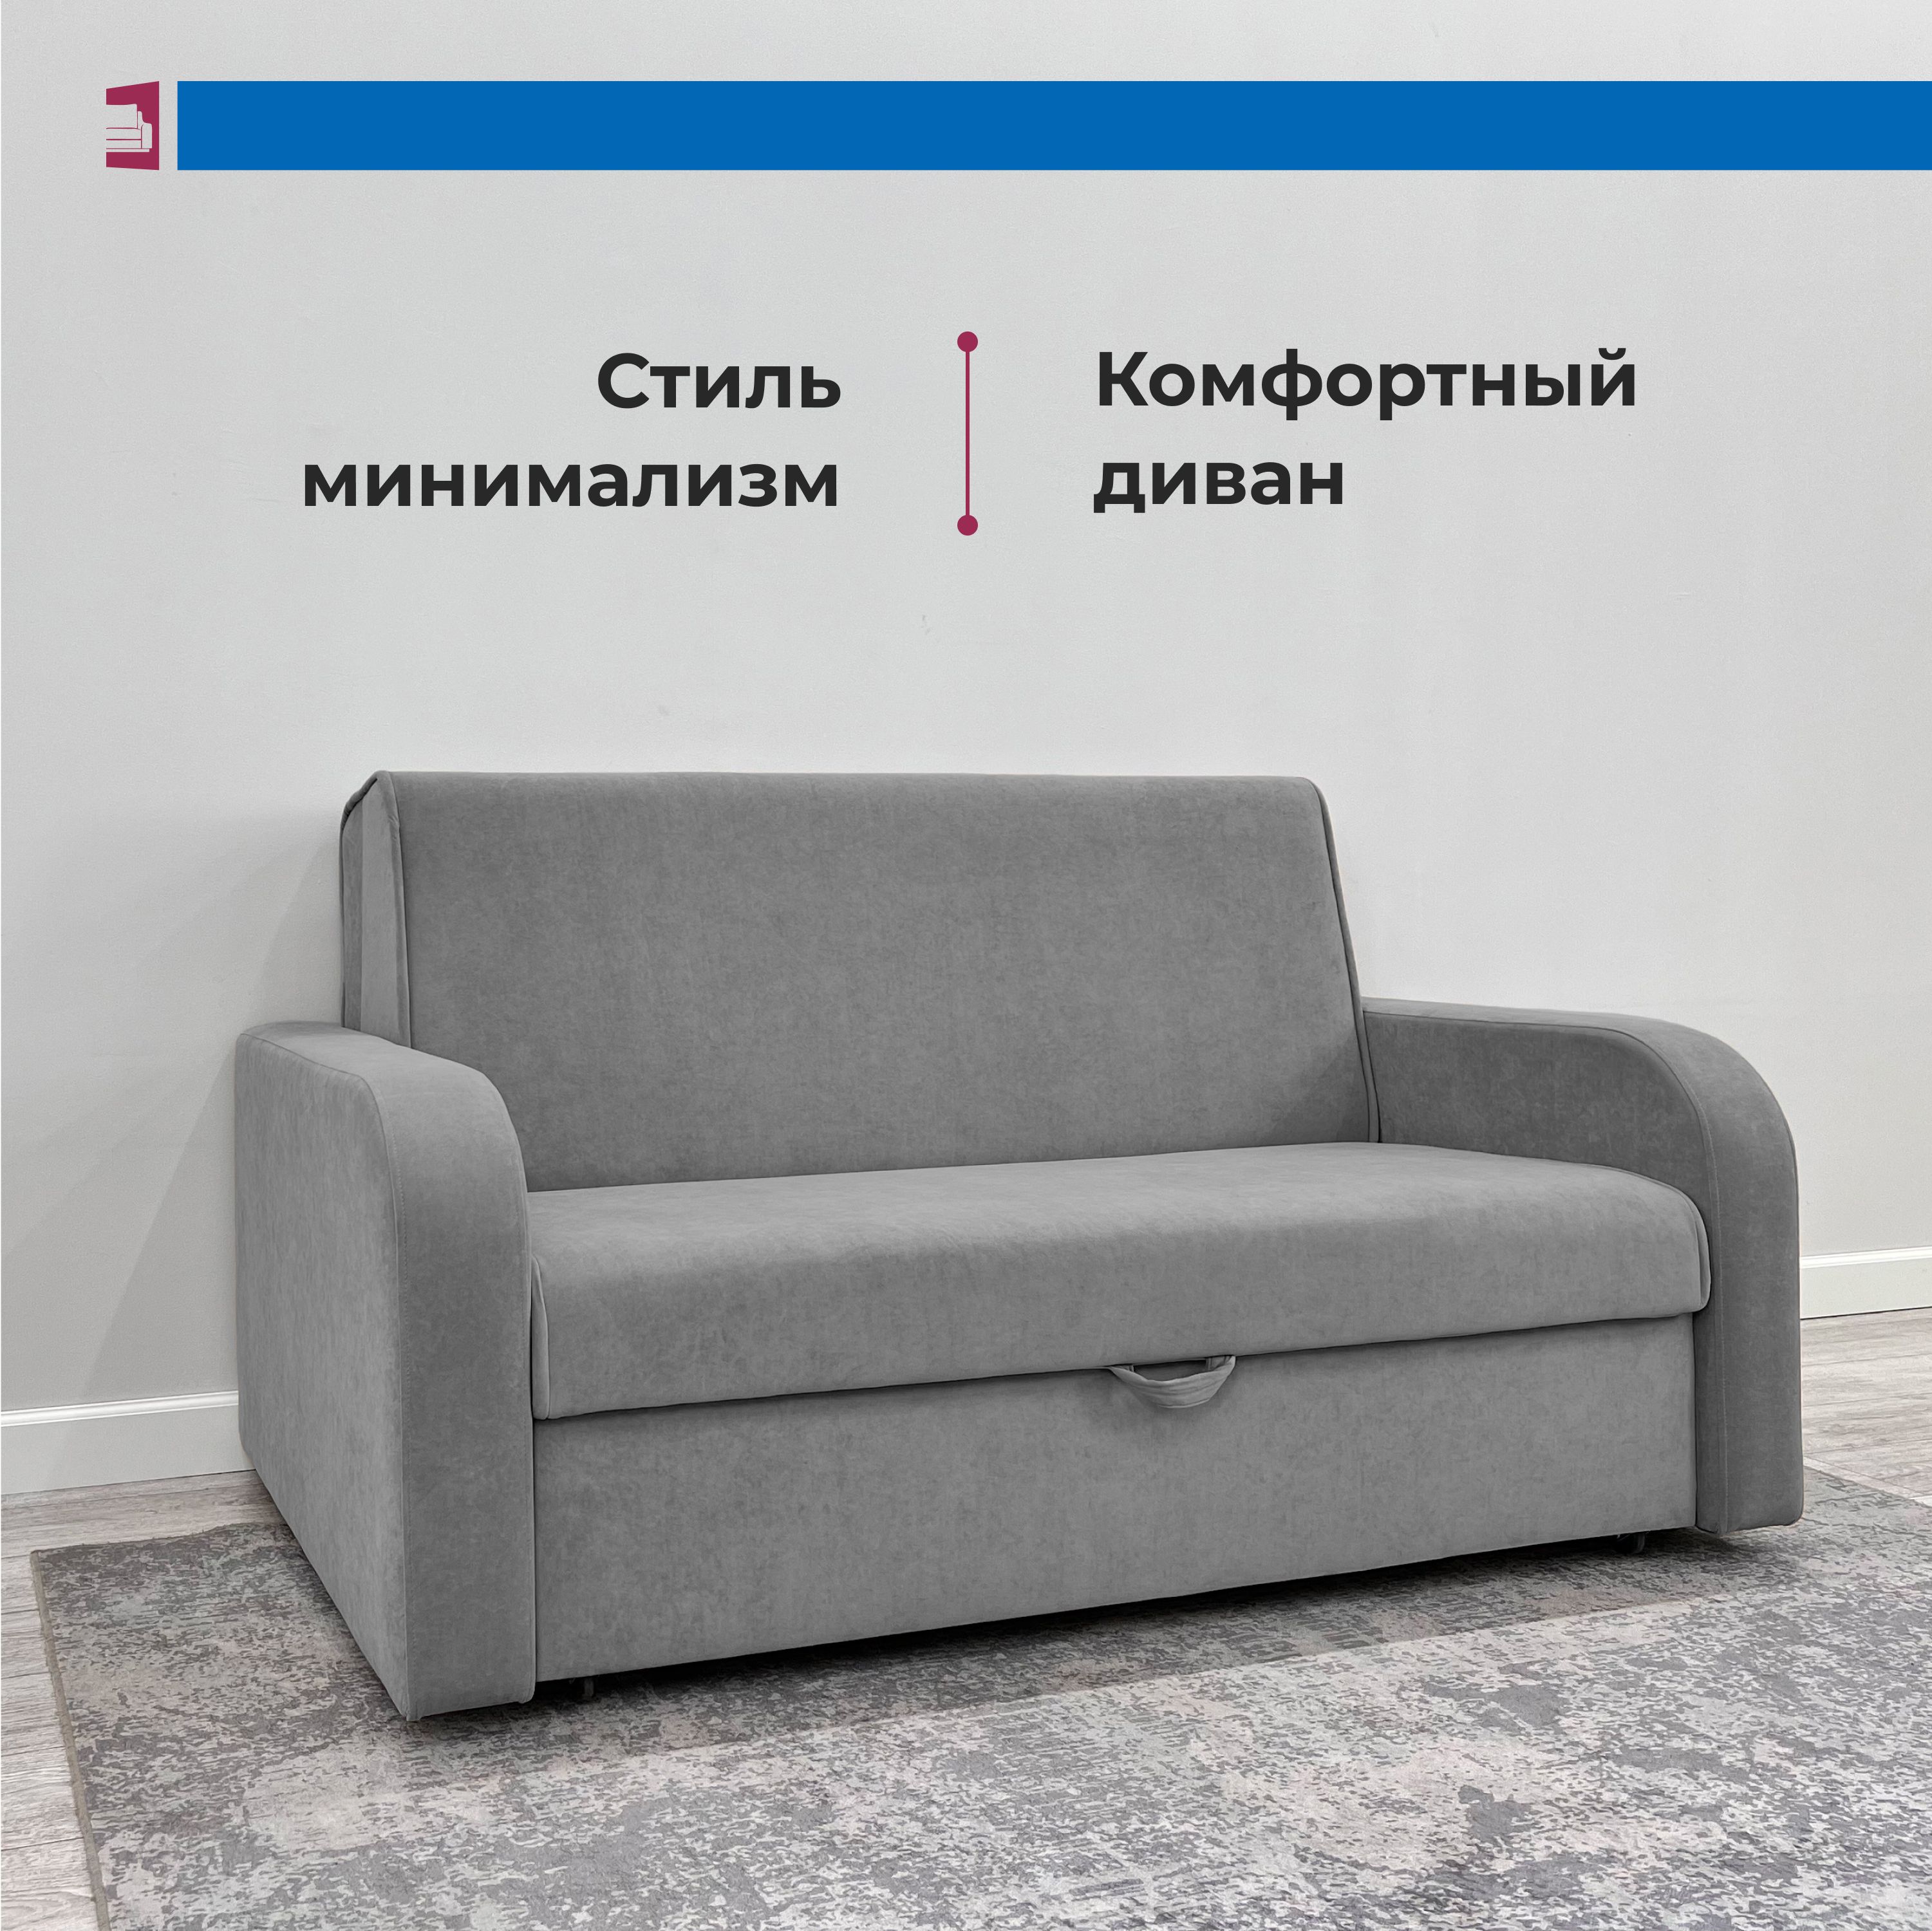 Рекомендации по обшивке углового дивана своими руками - магазин мебели Dommino